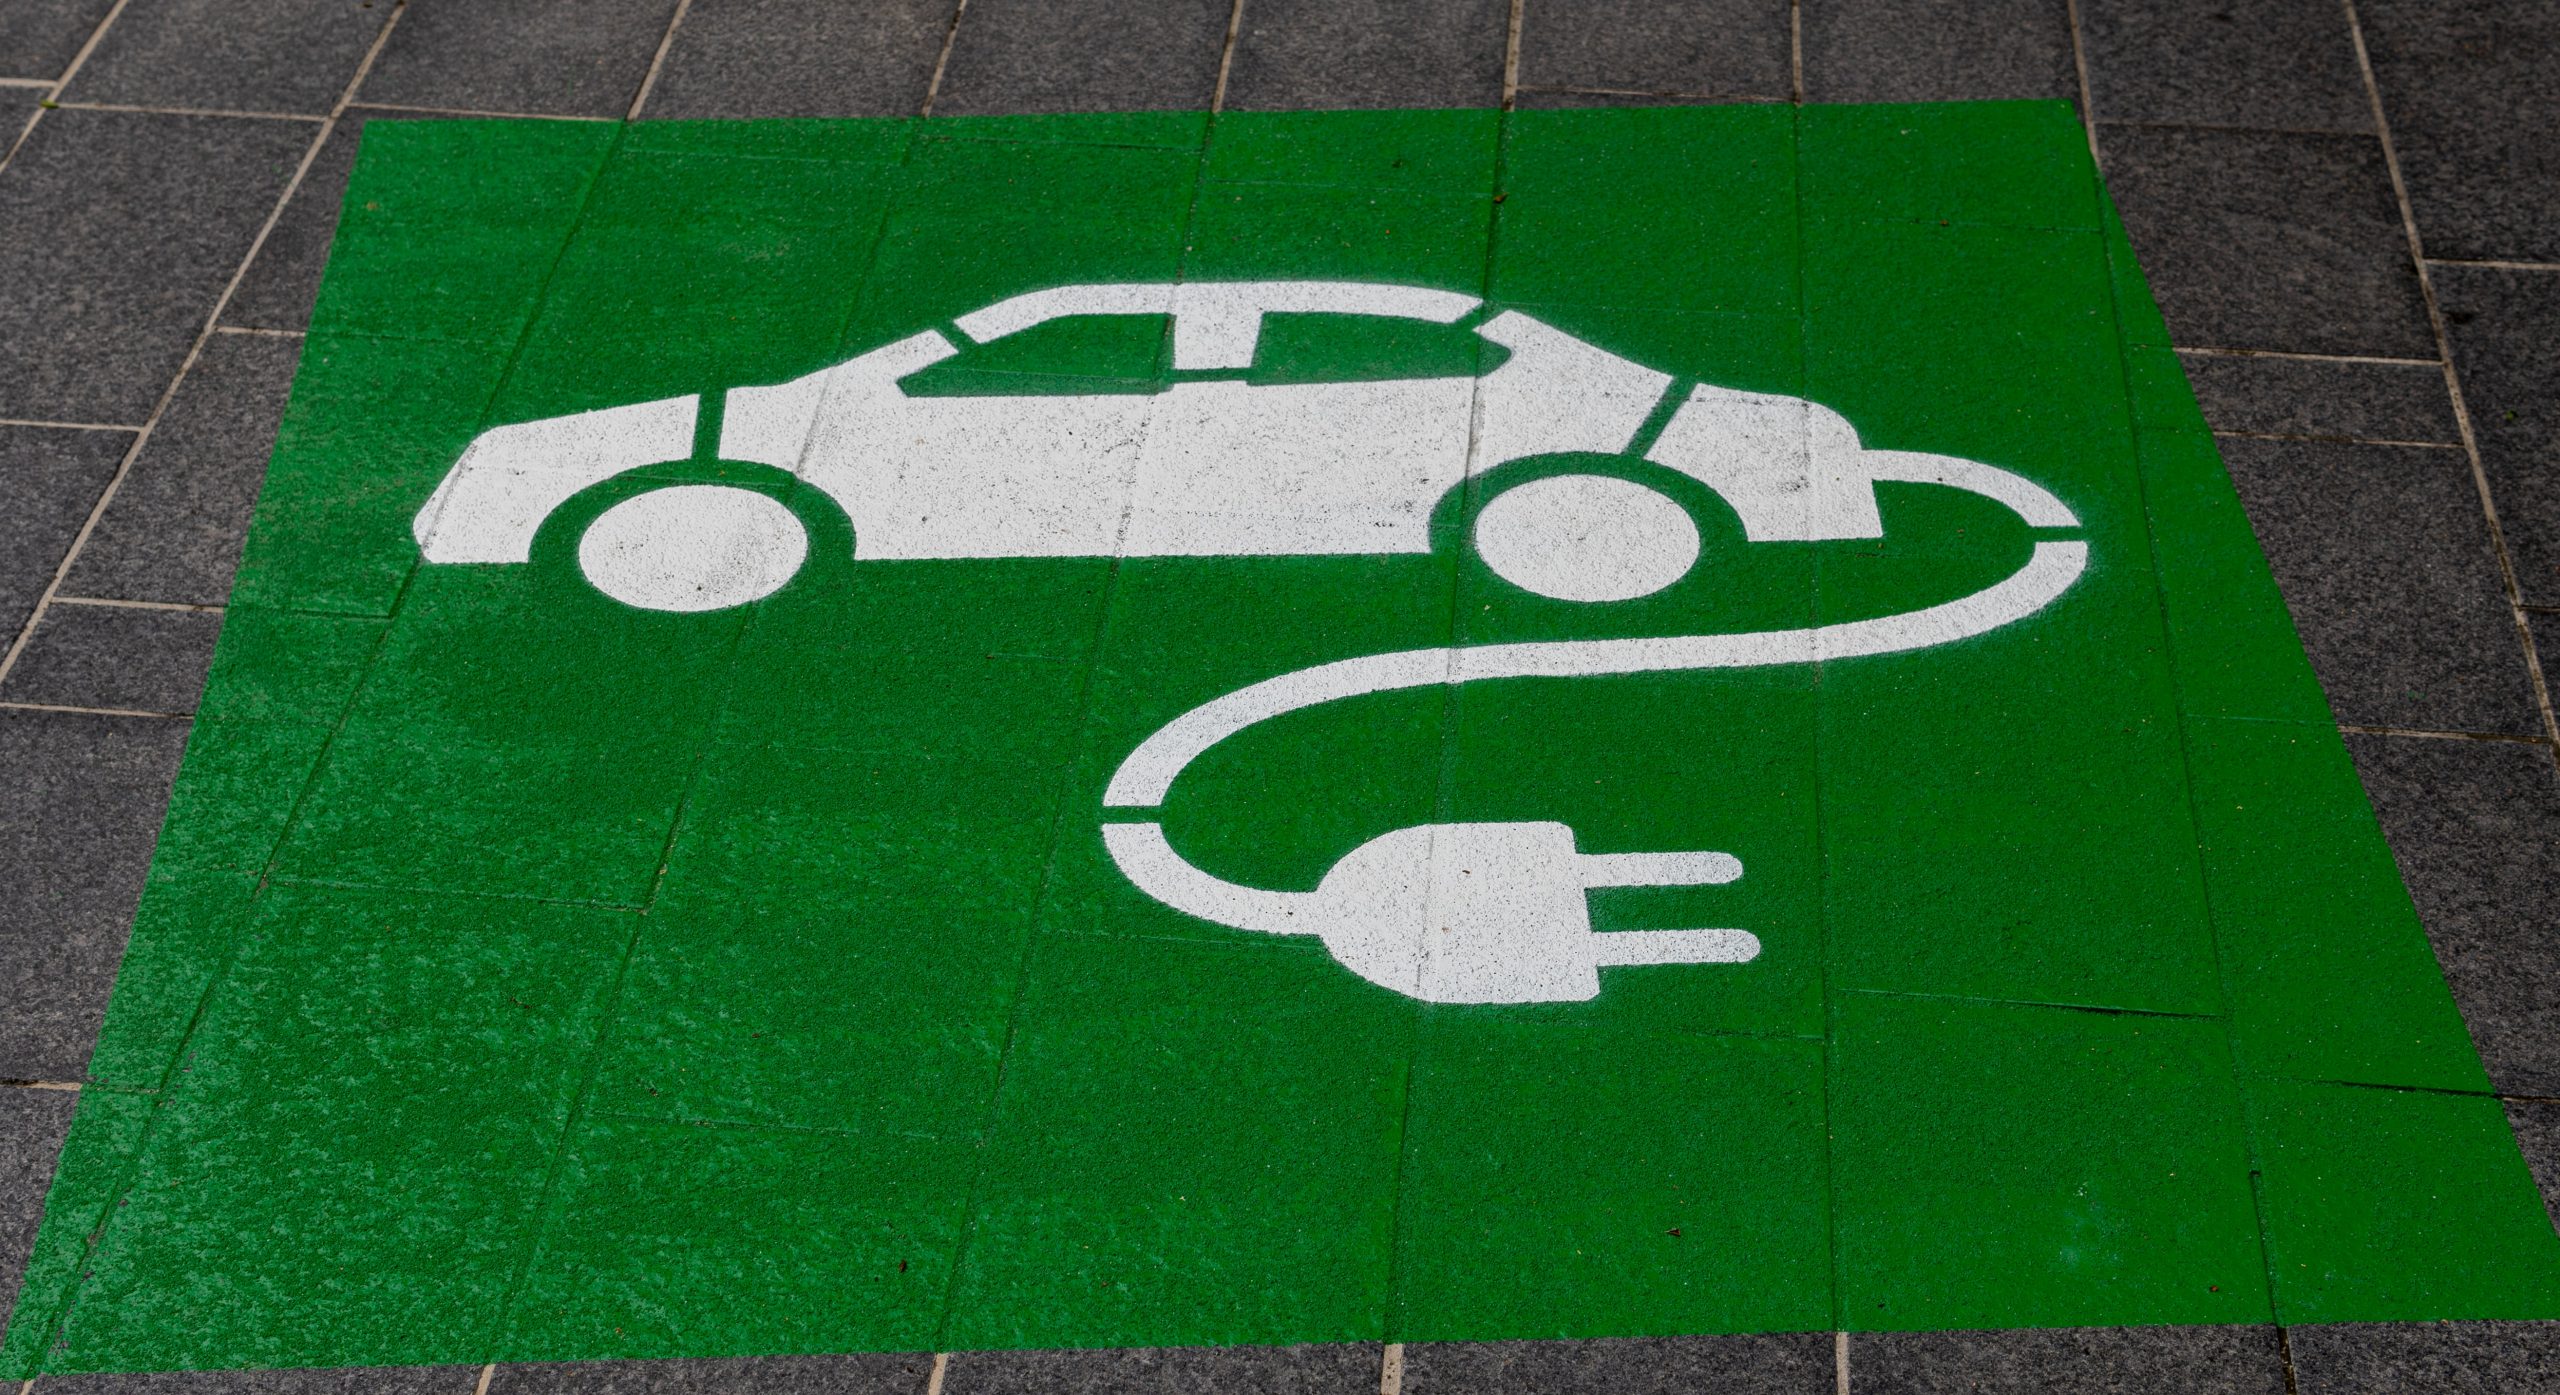 elecric car symbol on parking space pavement